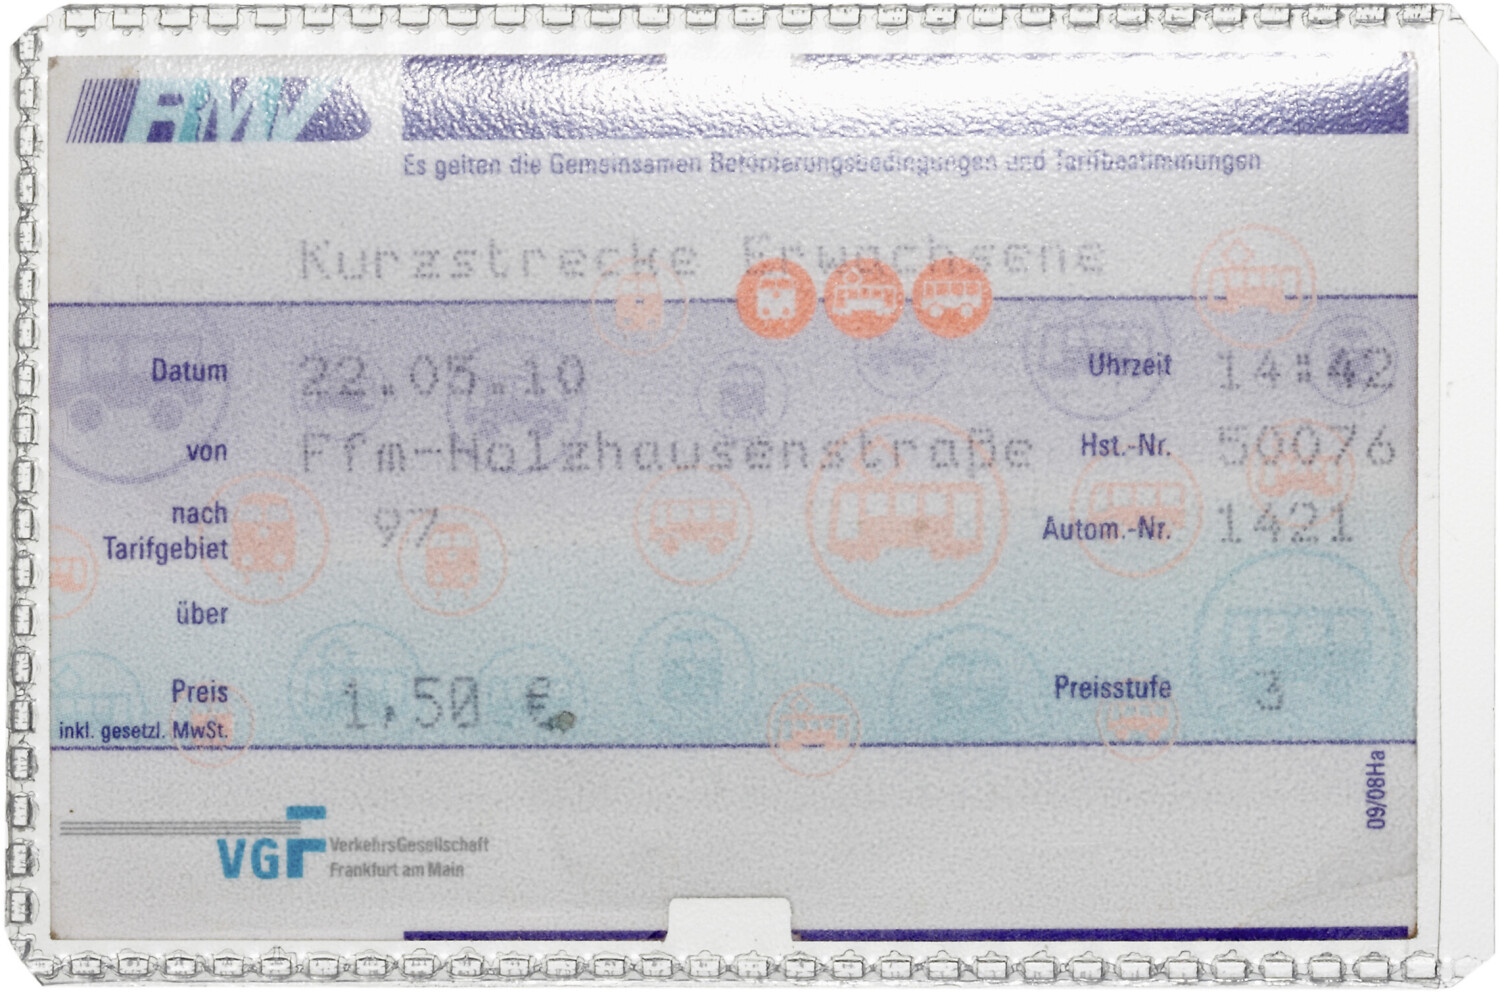 DURABLE Schutz- und Ausweishülle Visitenkarten (213619) 10 Stück ab 0,84 €